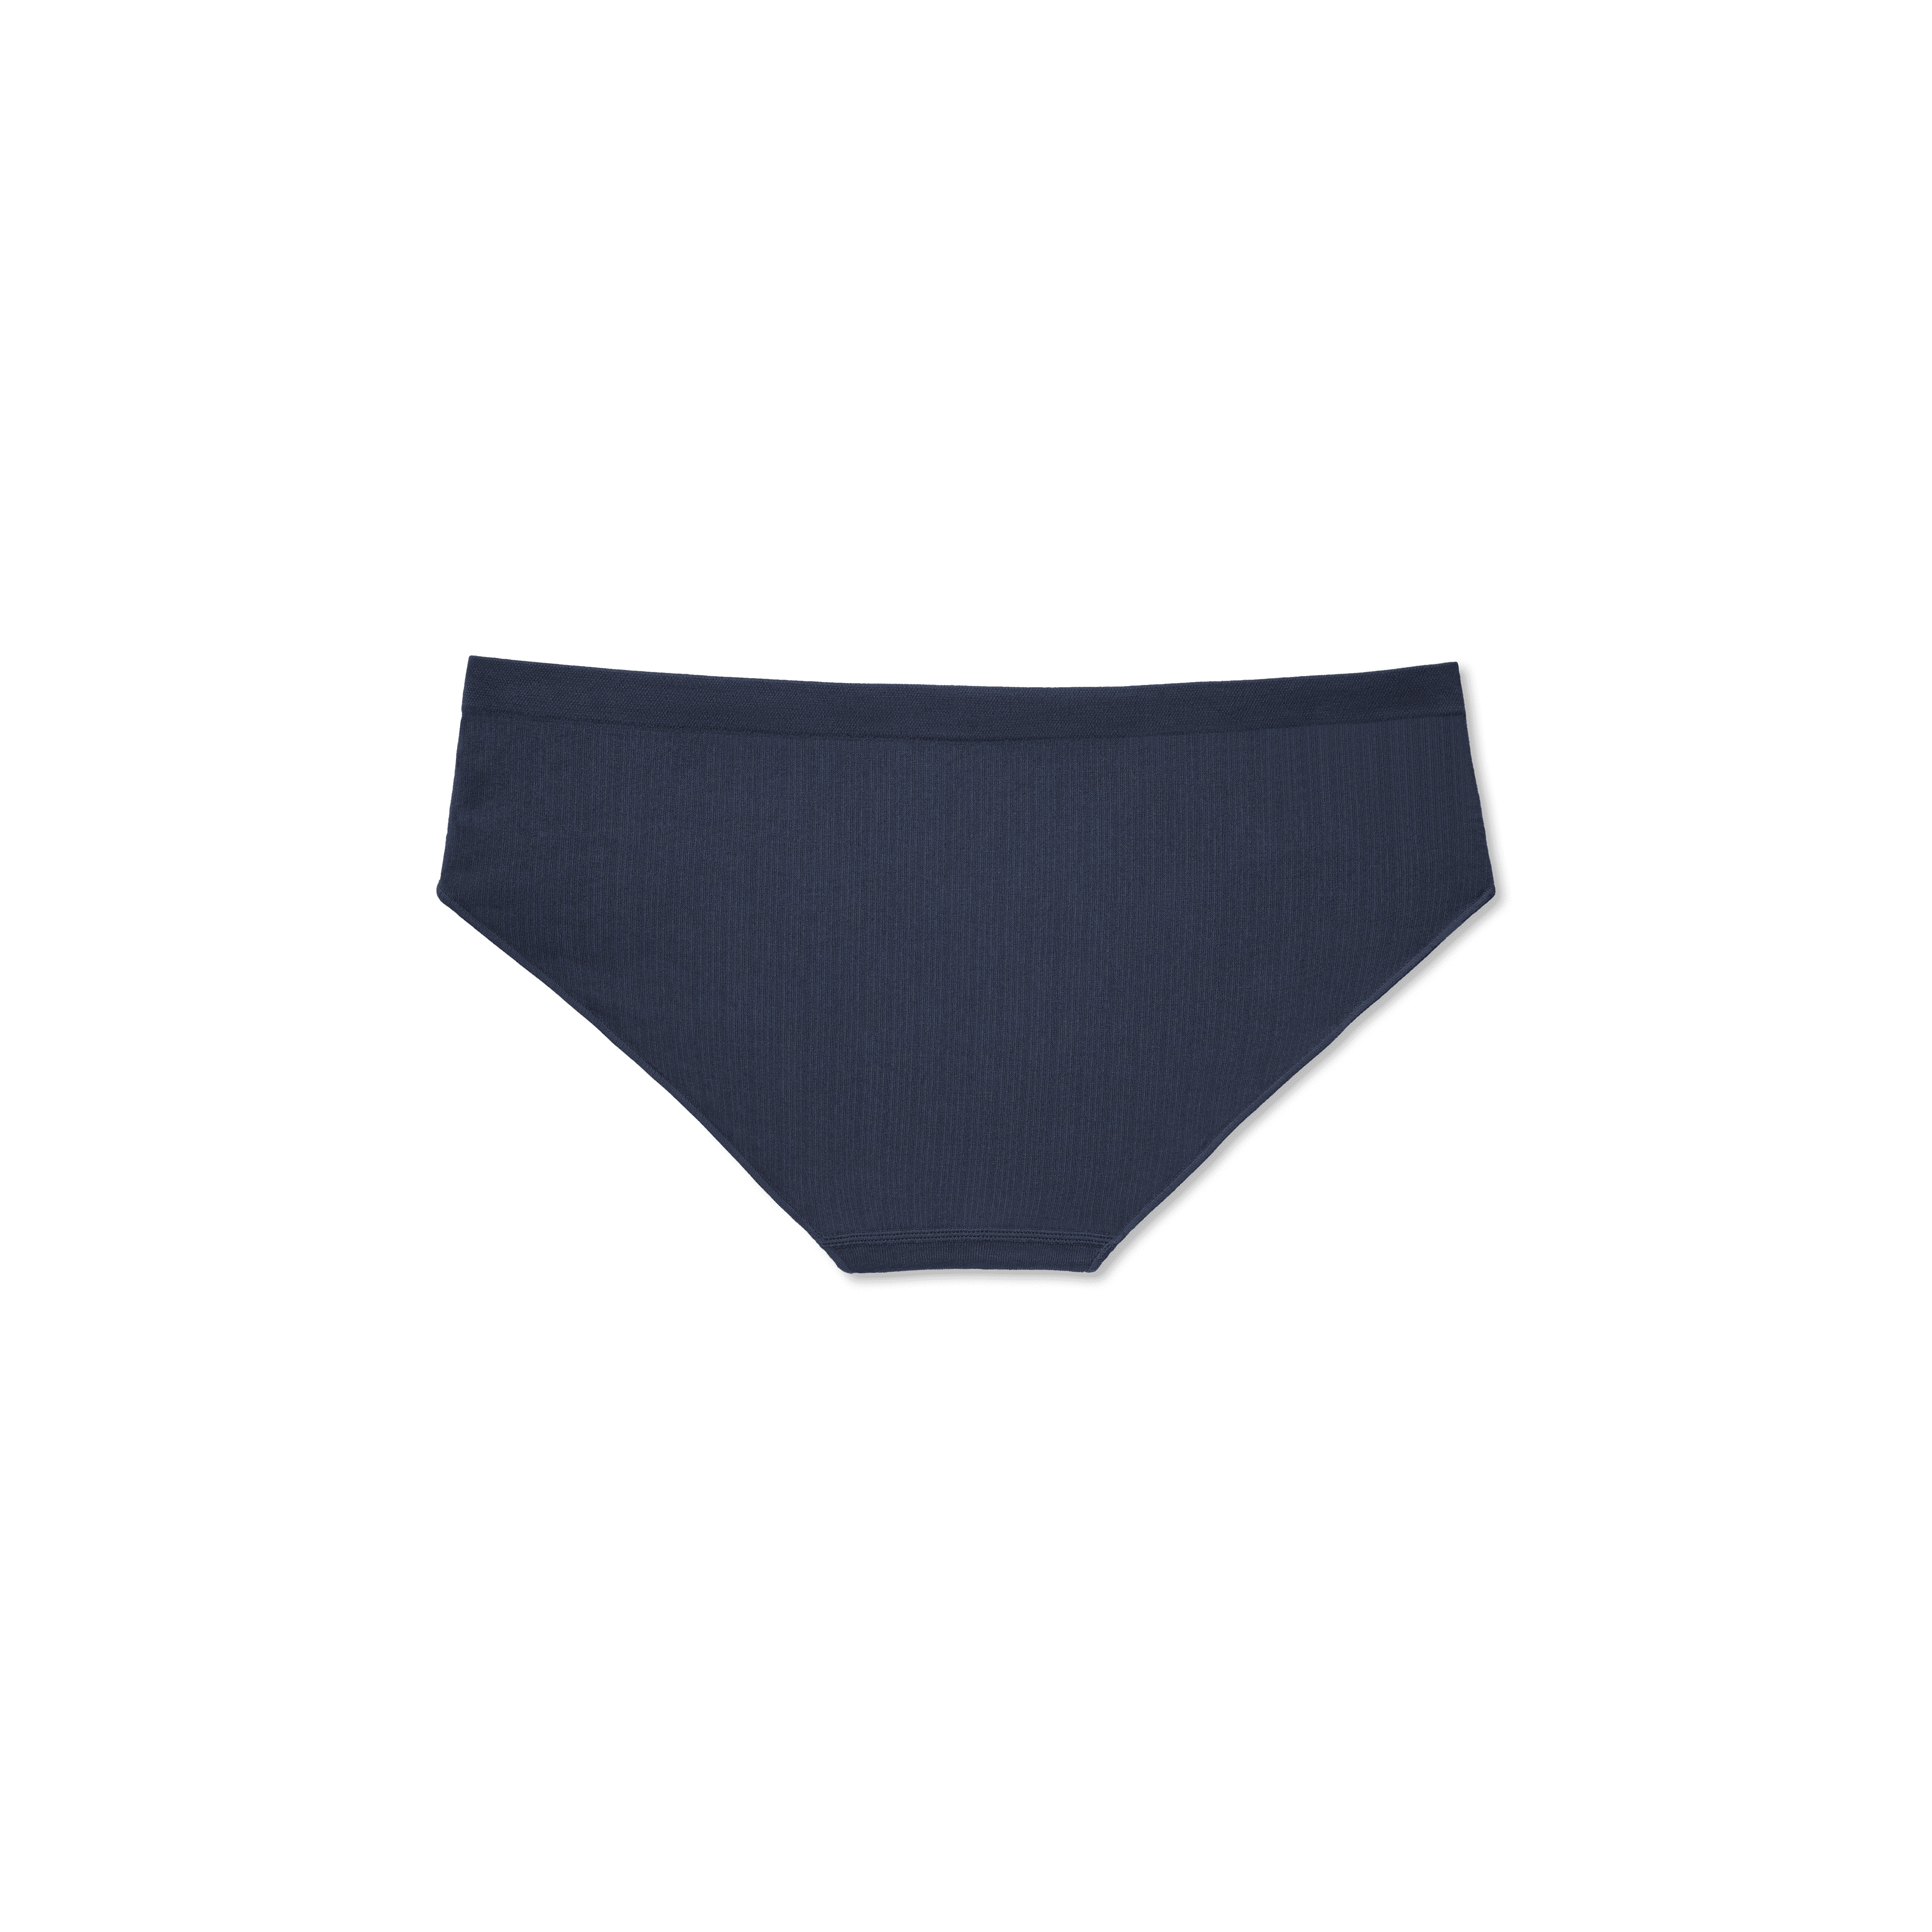 Bombas Women's Ribbed Seamless Hipster - Plus Size Underwear - Vintage Blue  - 2X - Modal Nylon - ShopStyle Panties